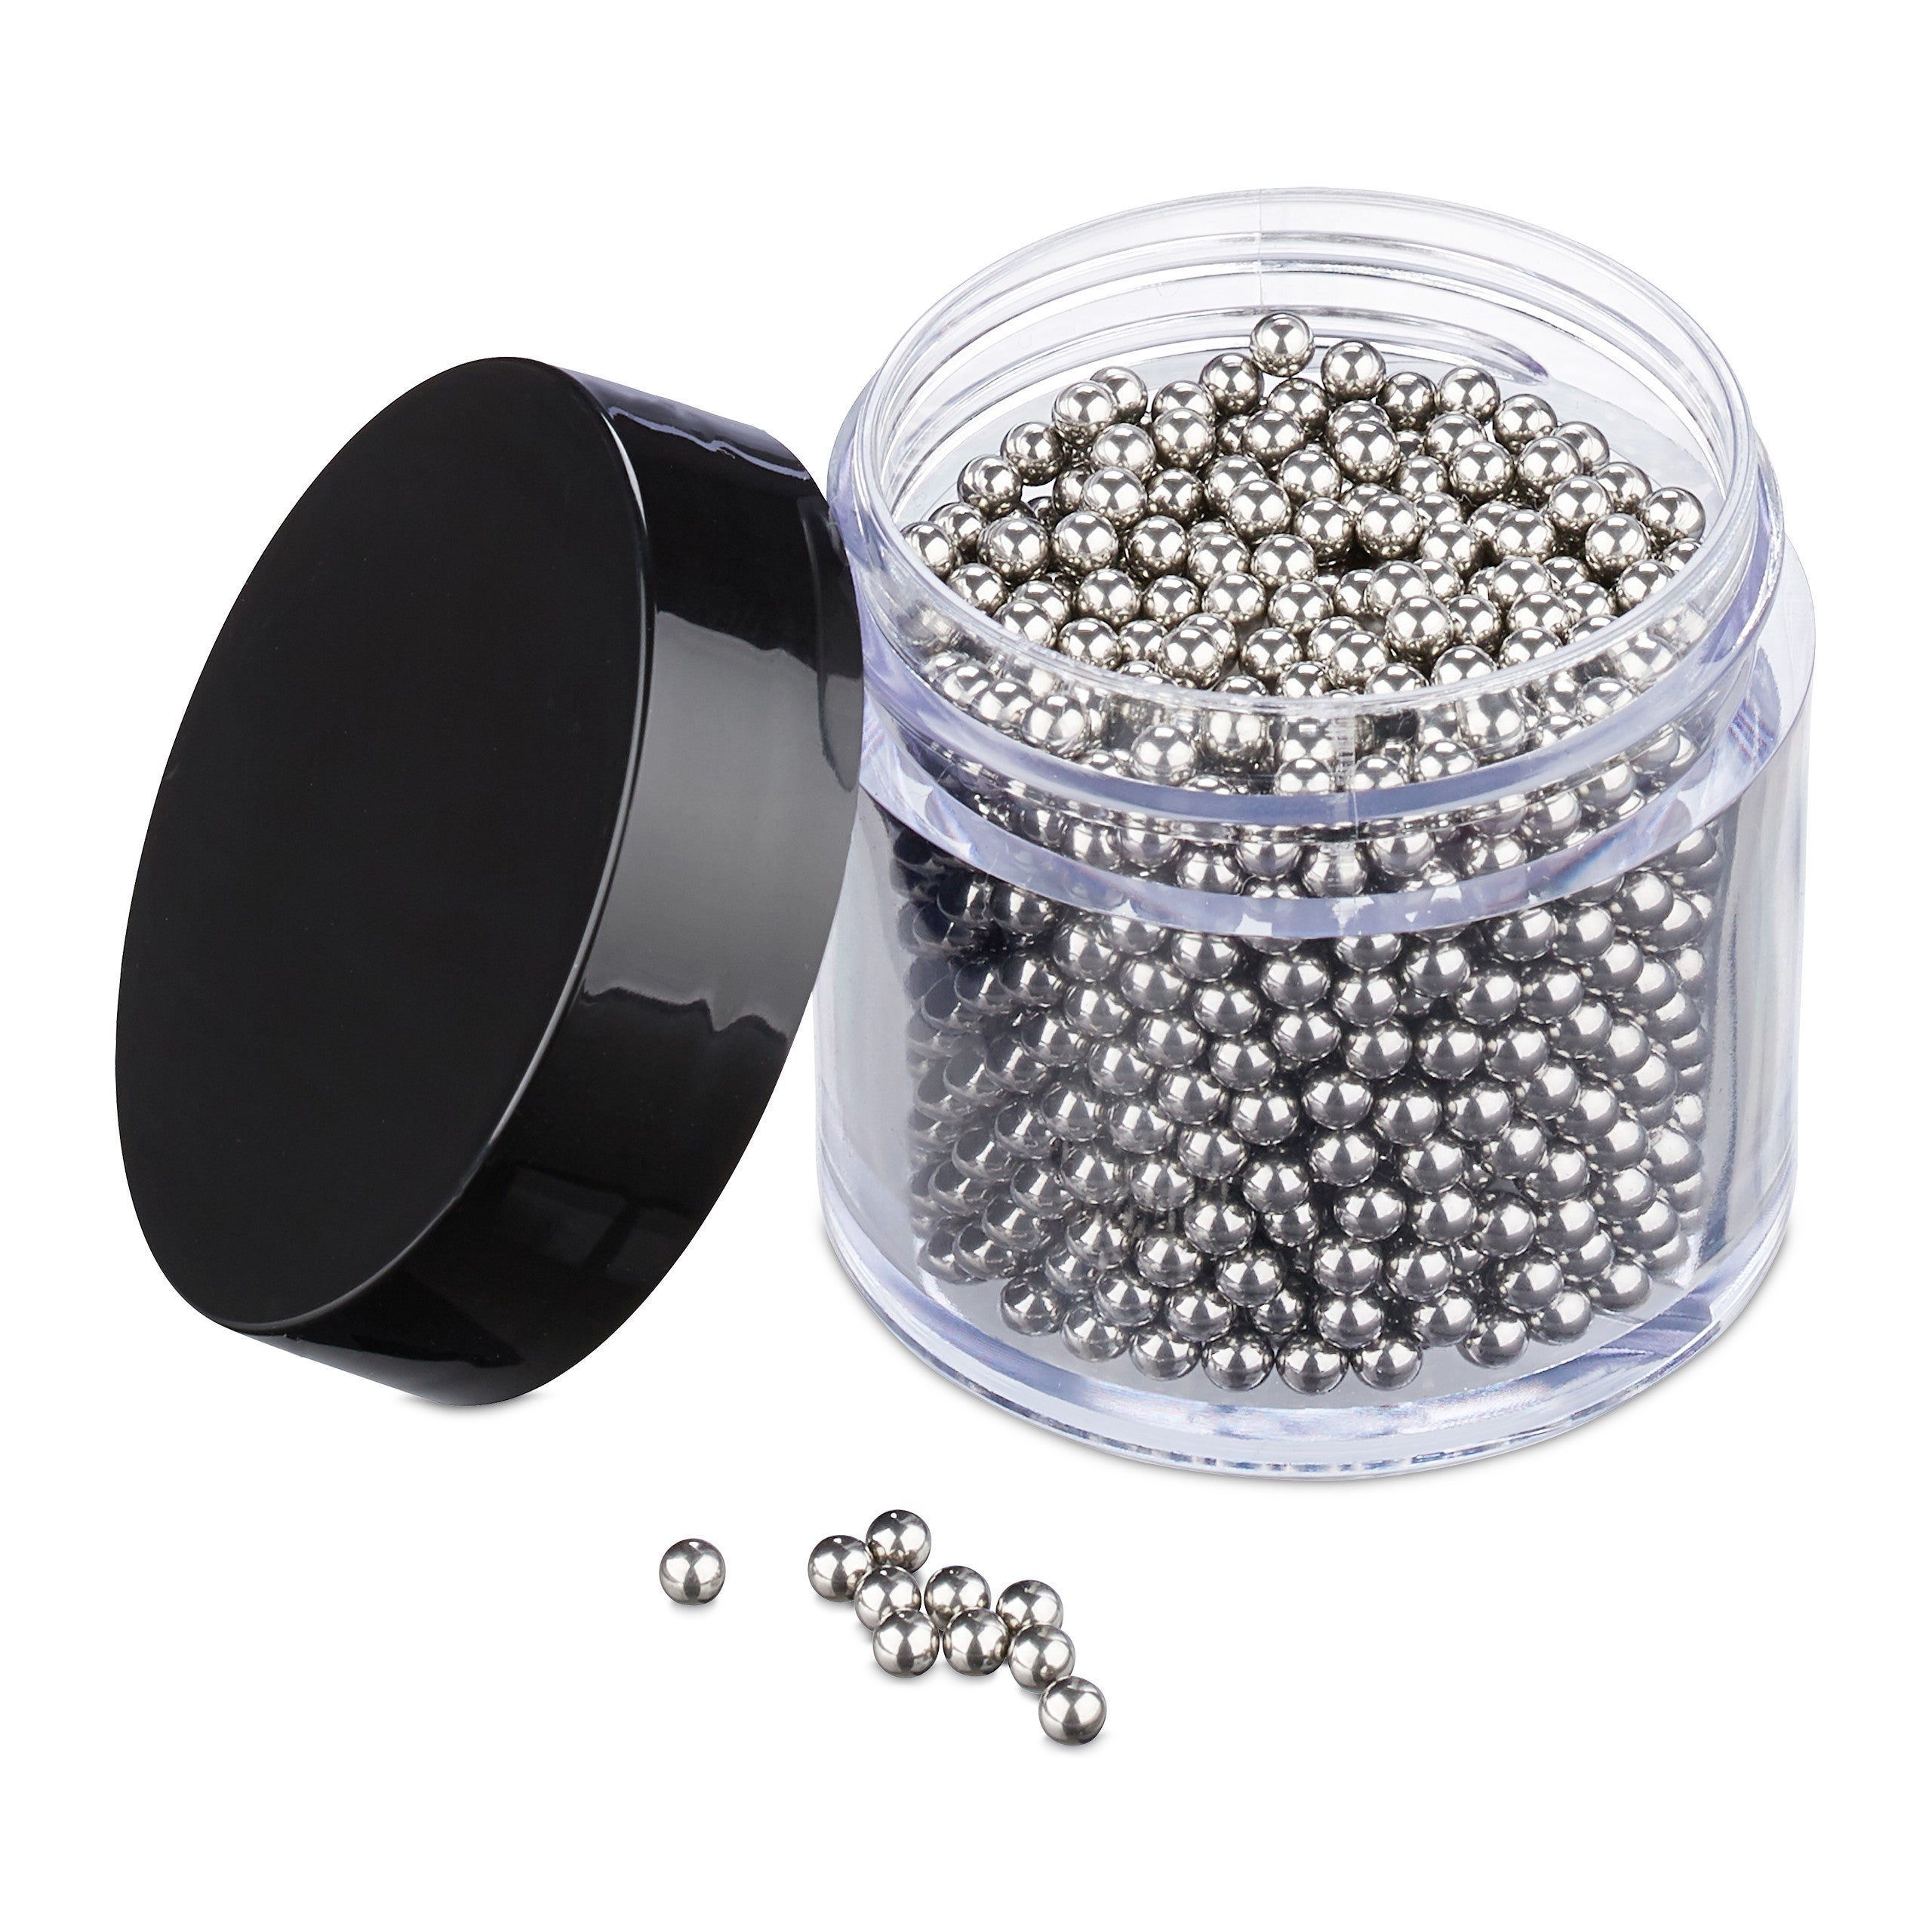 Bottiglie Vasi Caraffe 3mm Perle di Pulizia in Acciaio Inox Riutilizzabili Perline per Pulizia per Decanter Pinsheng 800 Pezzi Perle di Pulizia per Decanter 